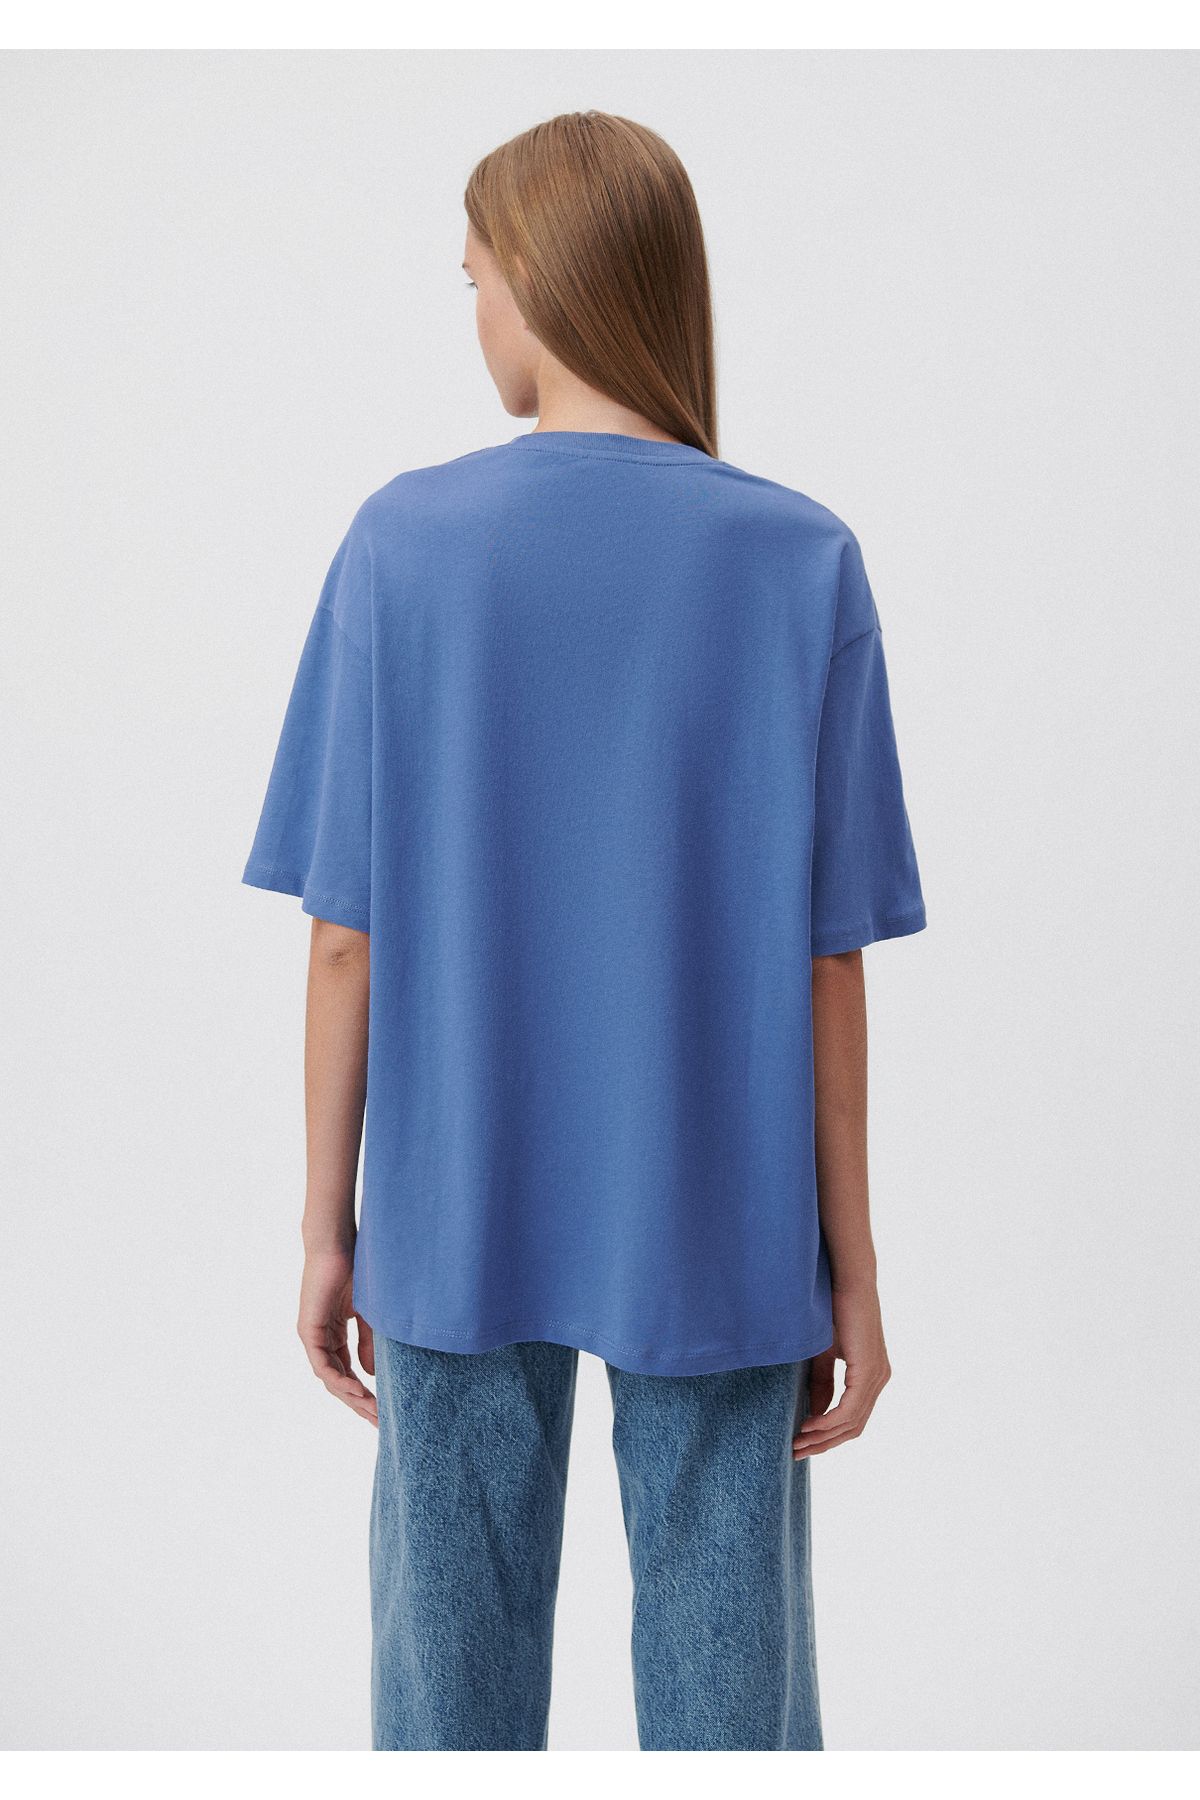 Mavi تی شرت چاپ شده با لوگو سایز بزرگ / برش عریض 1600843-70662